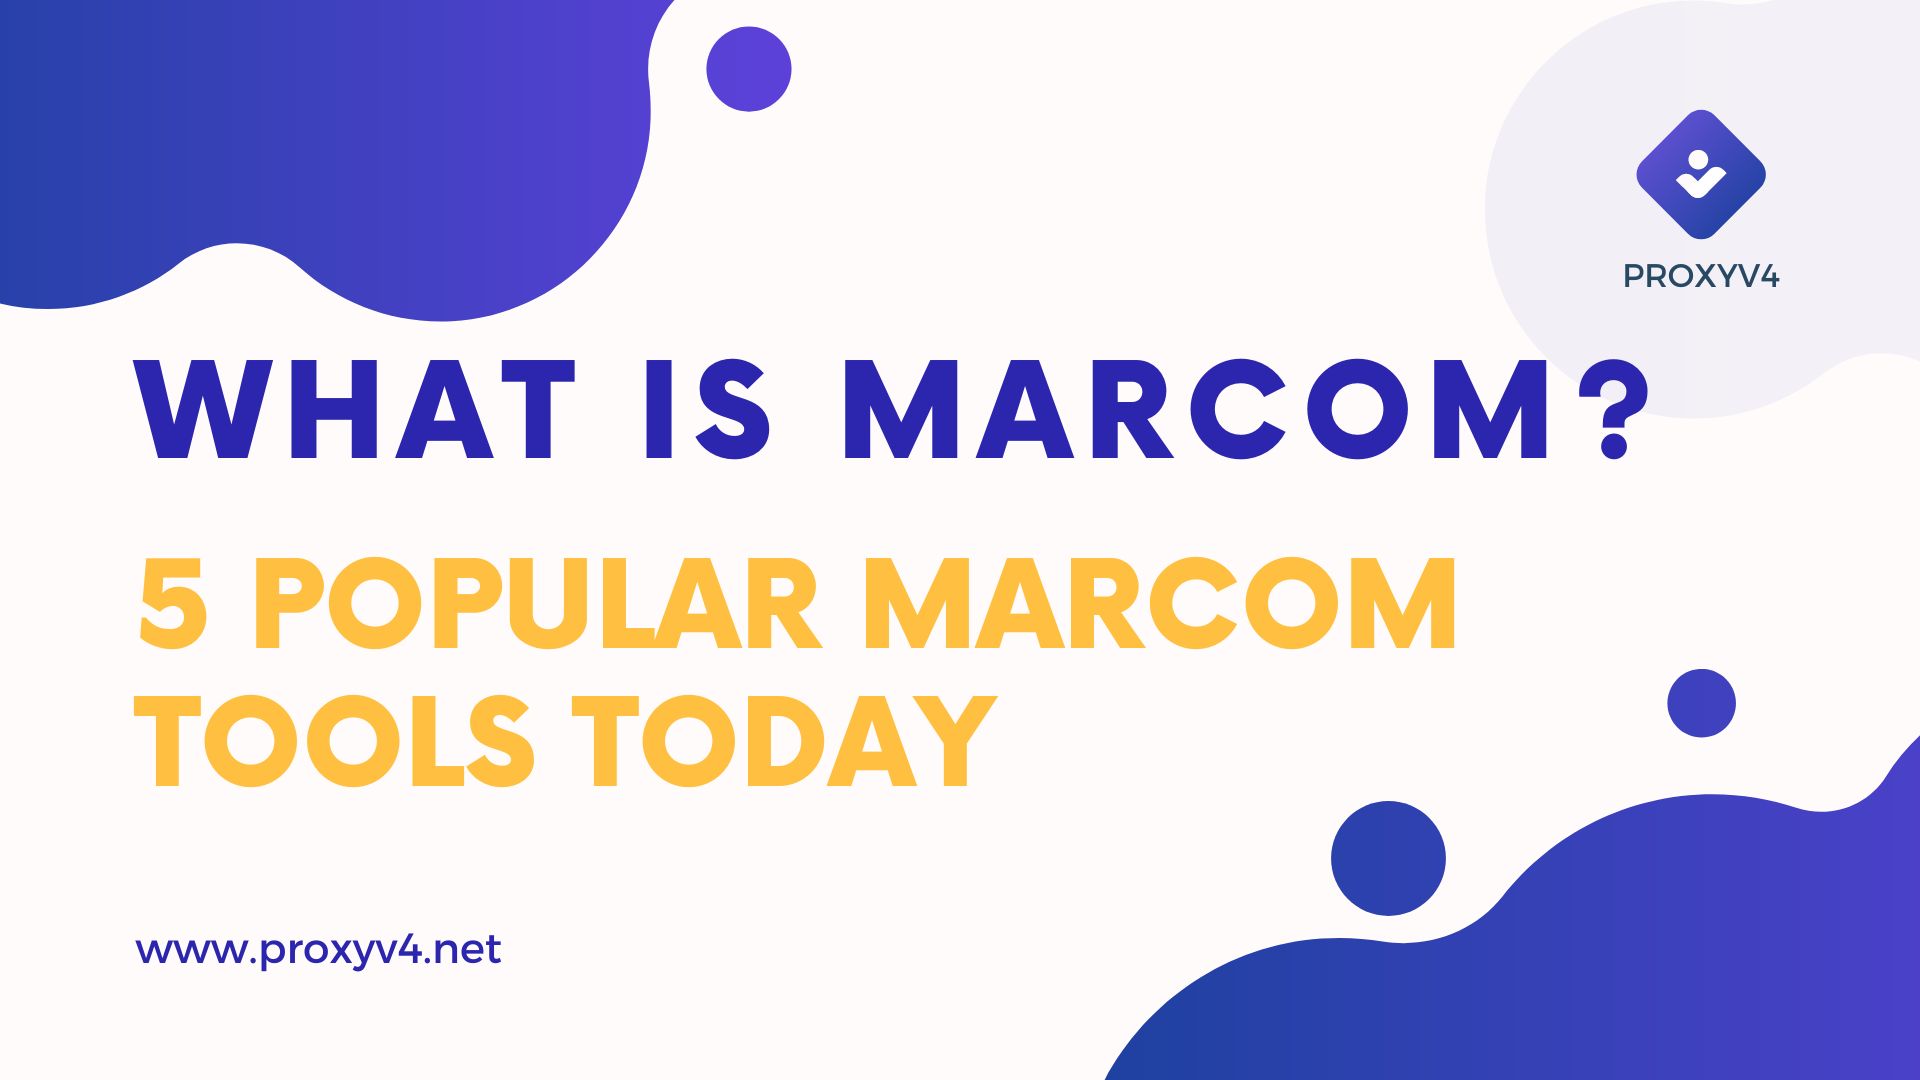 What is Marcom? 5 Popular Marcom Tools Today